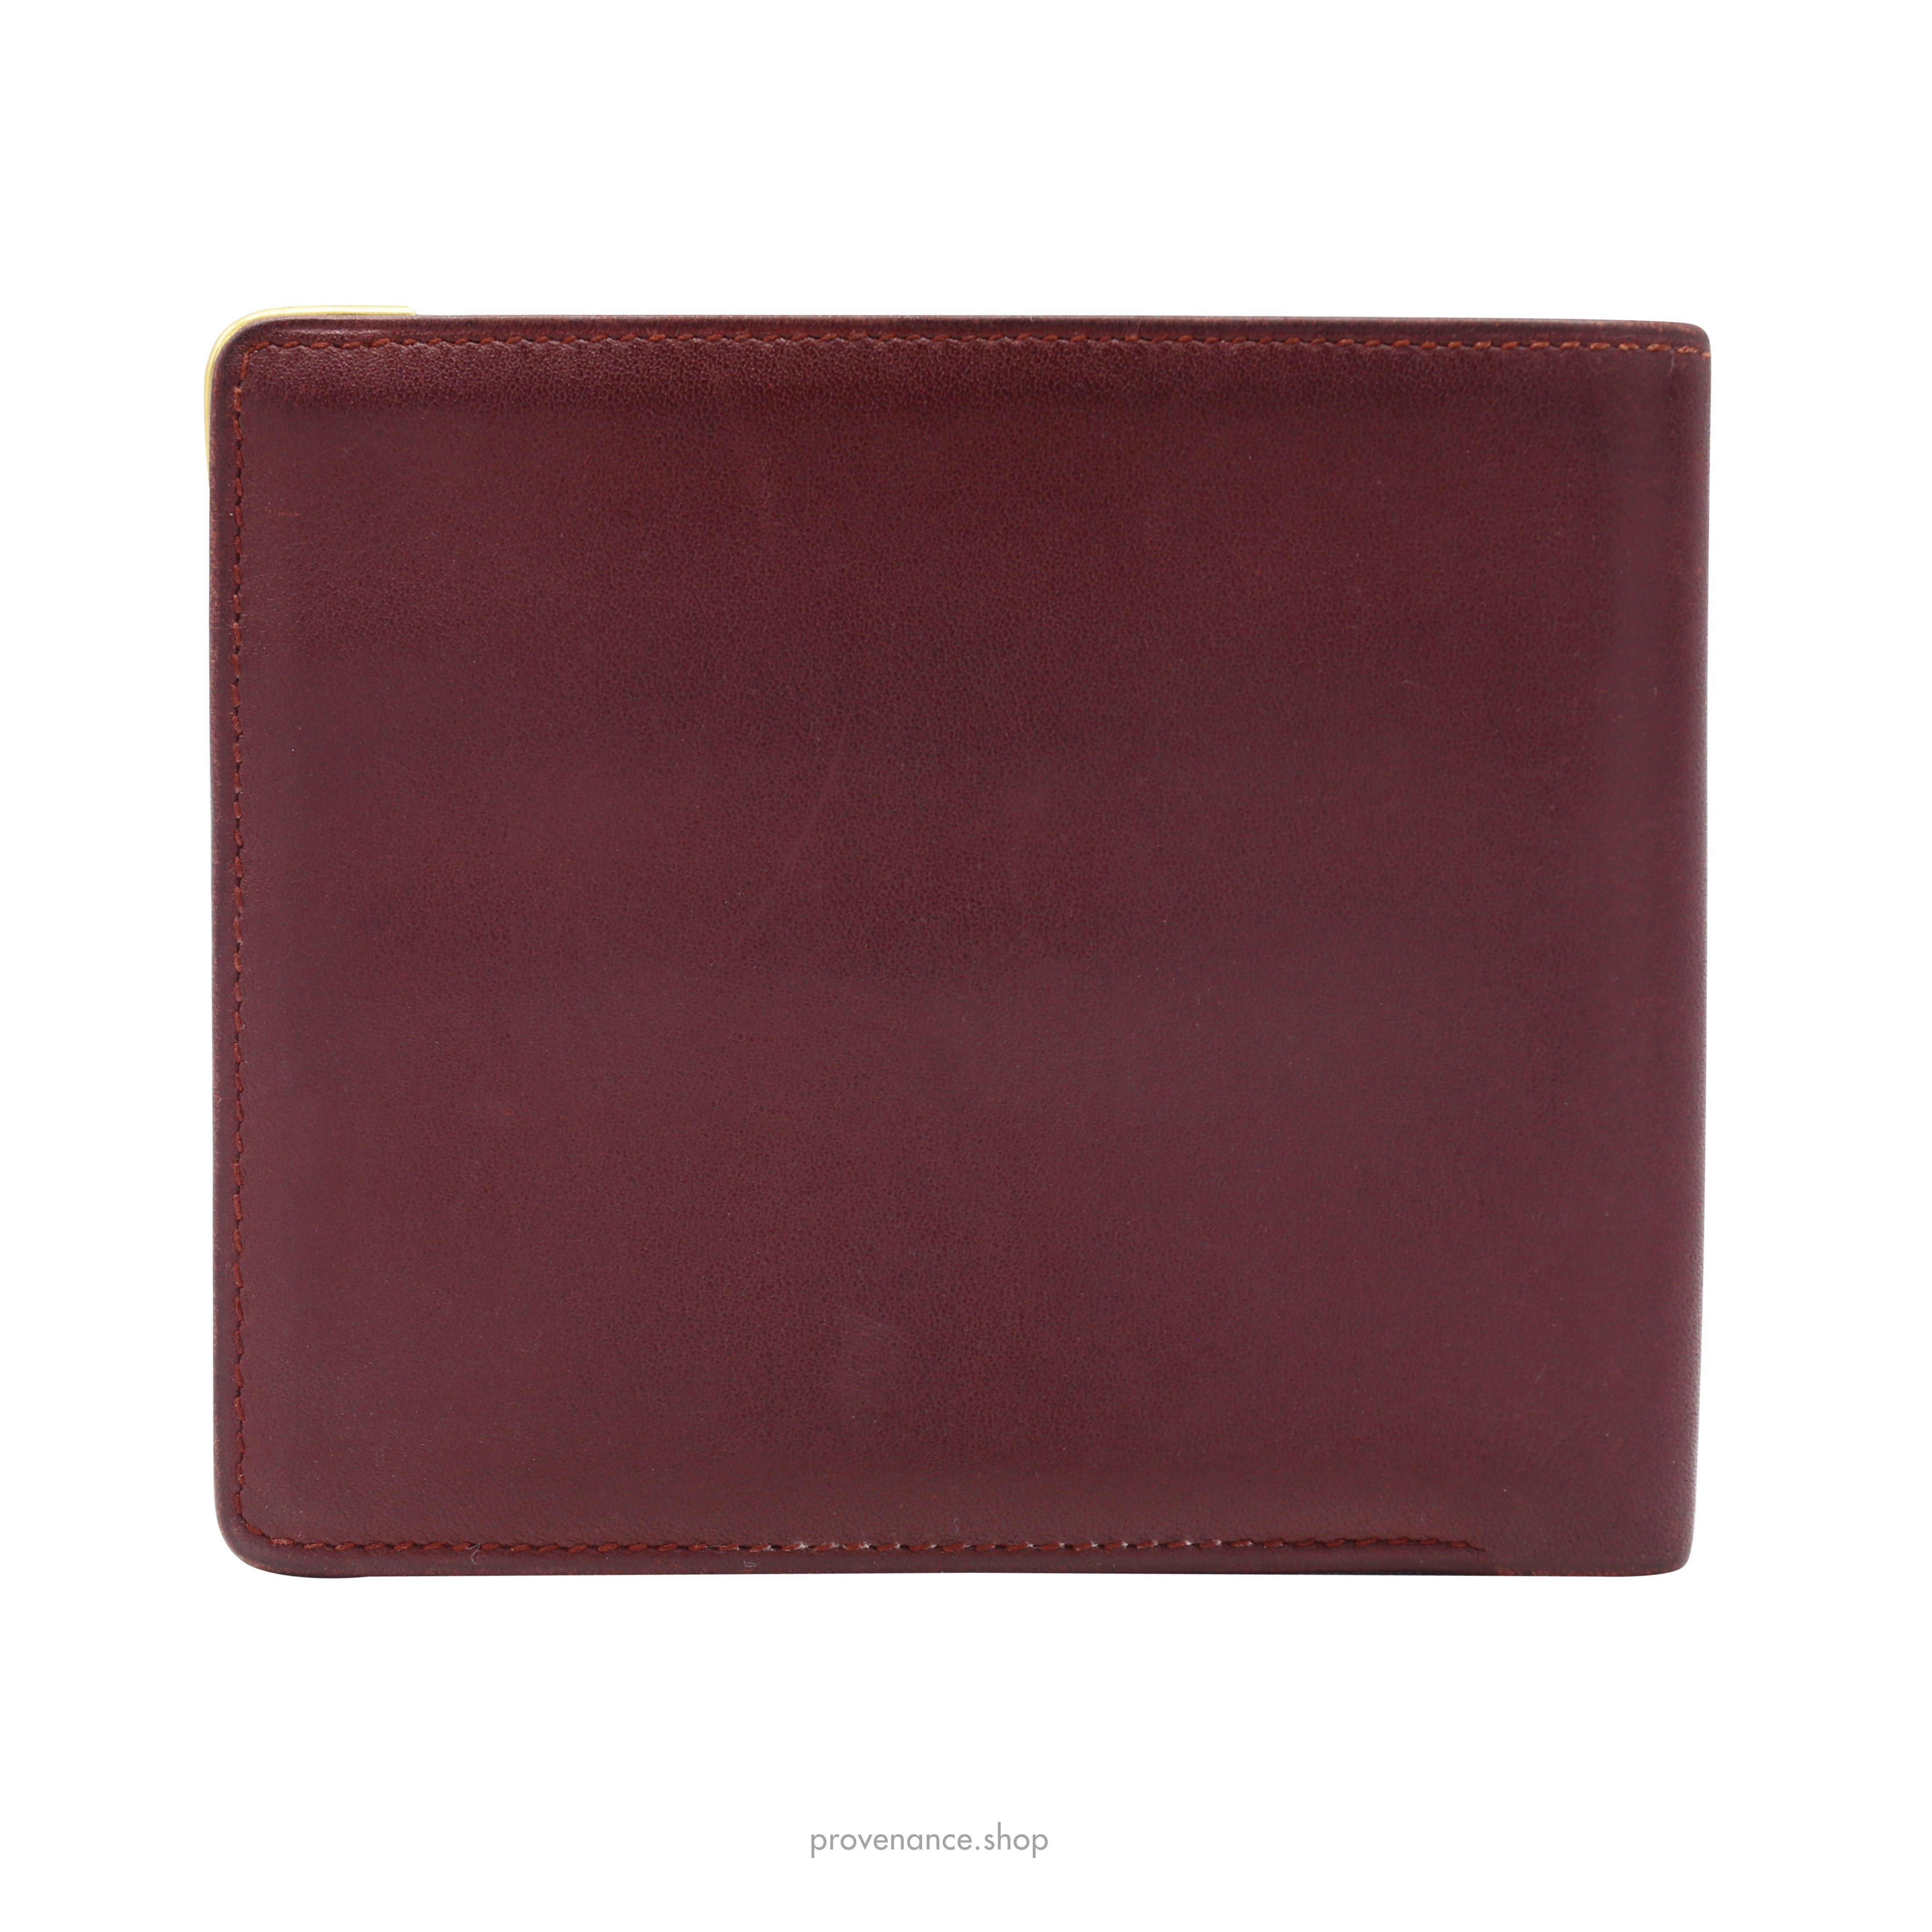 Bifold Wallet - Burgundy Calfskin Leather - 2